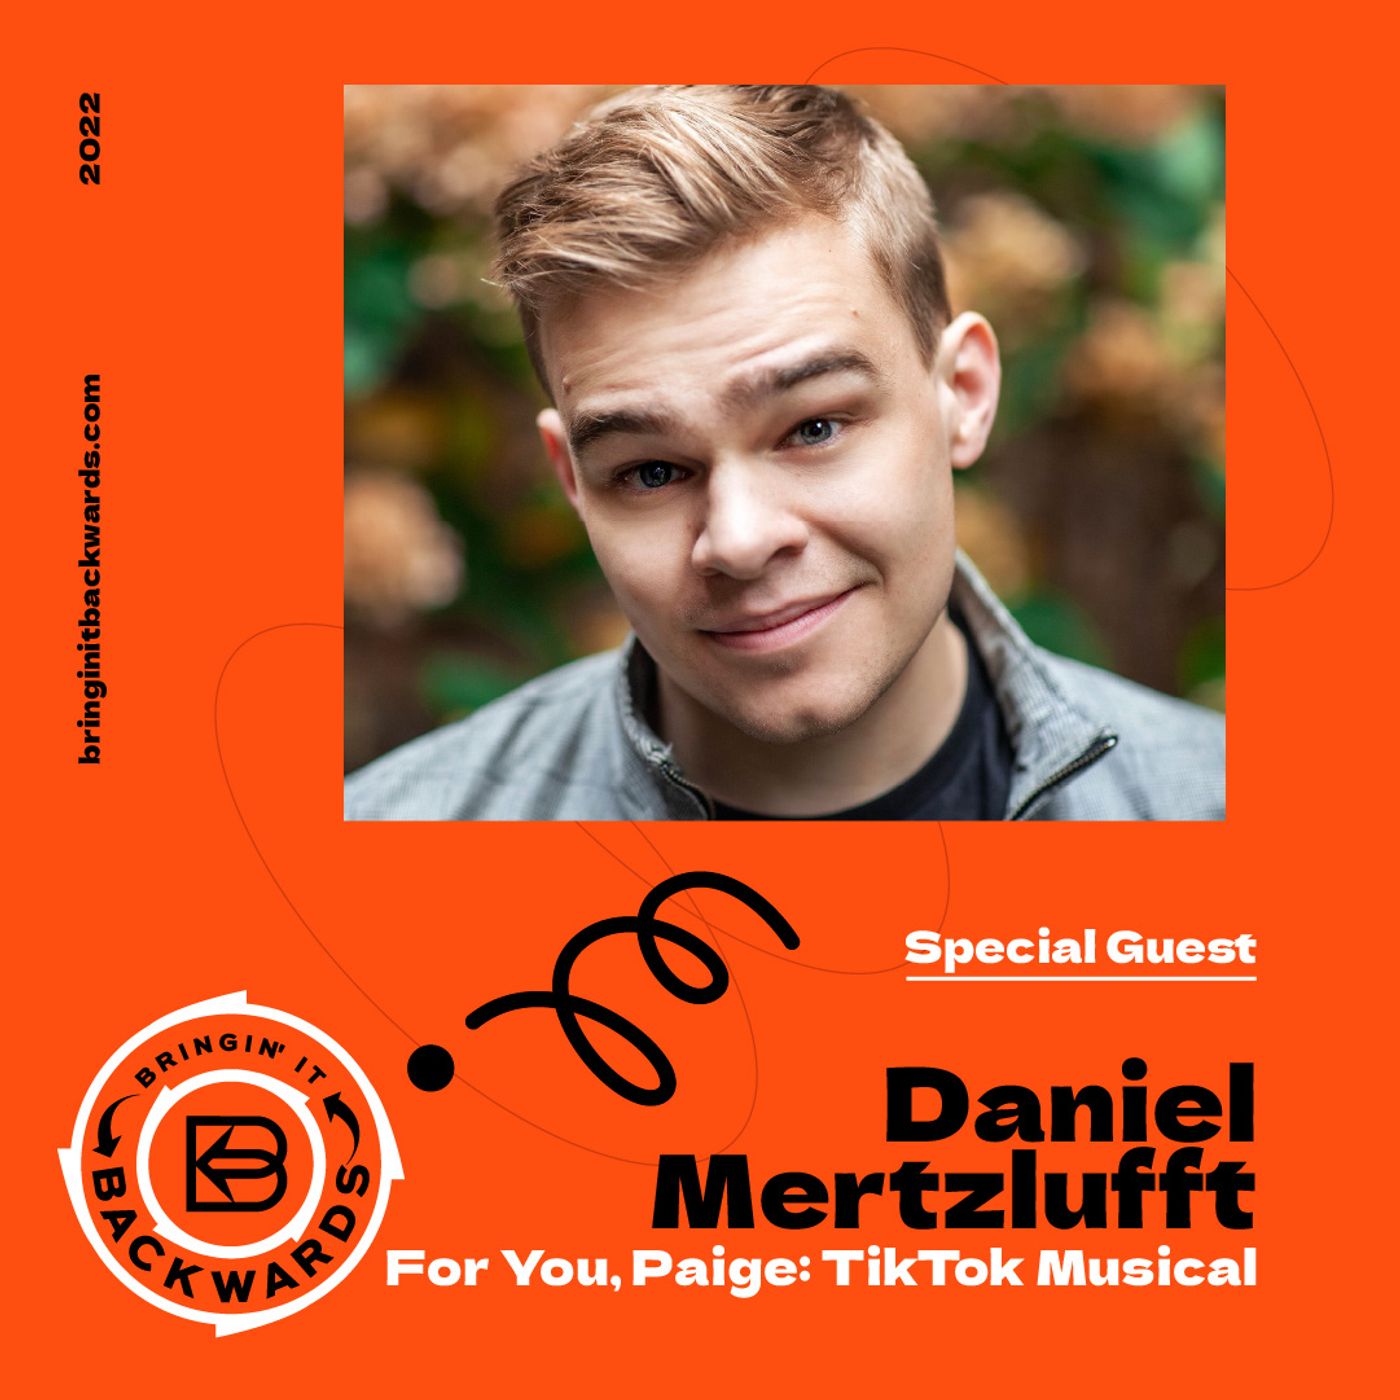 Interview with Daniel Mertzlufft (TikTok Musical) Image